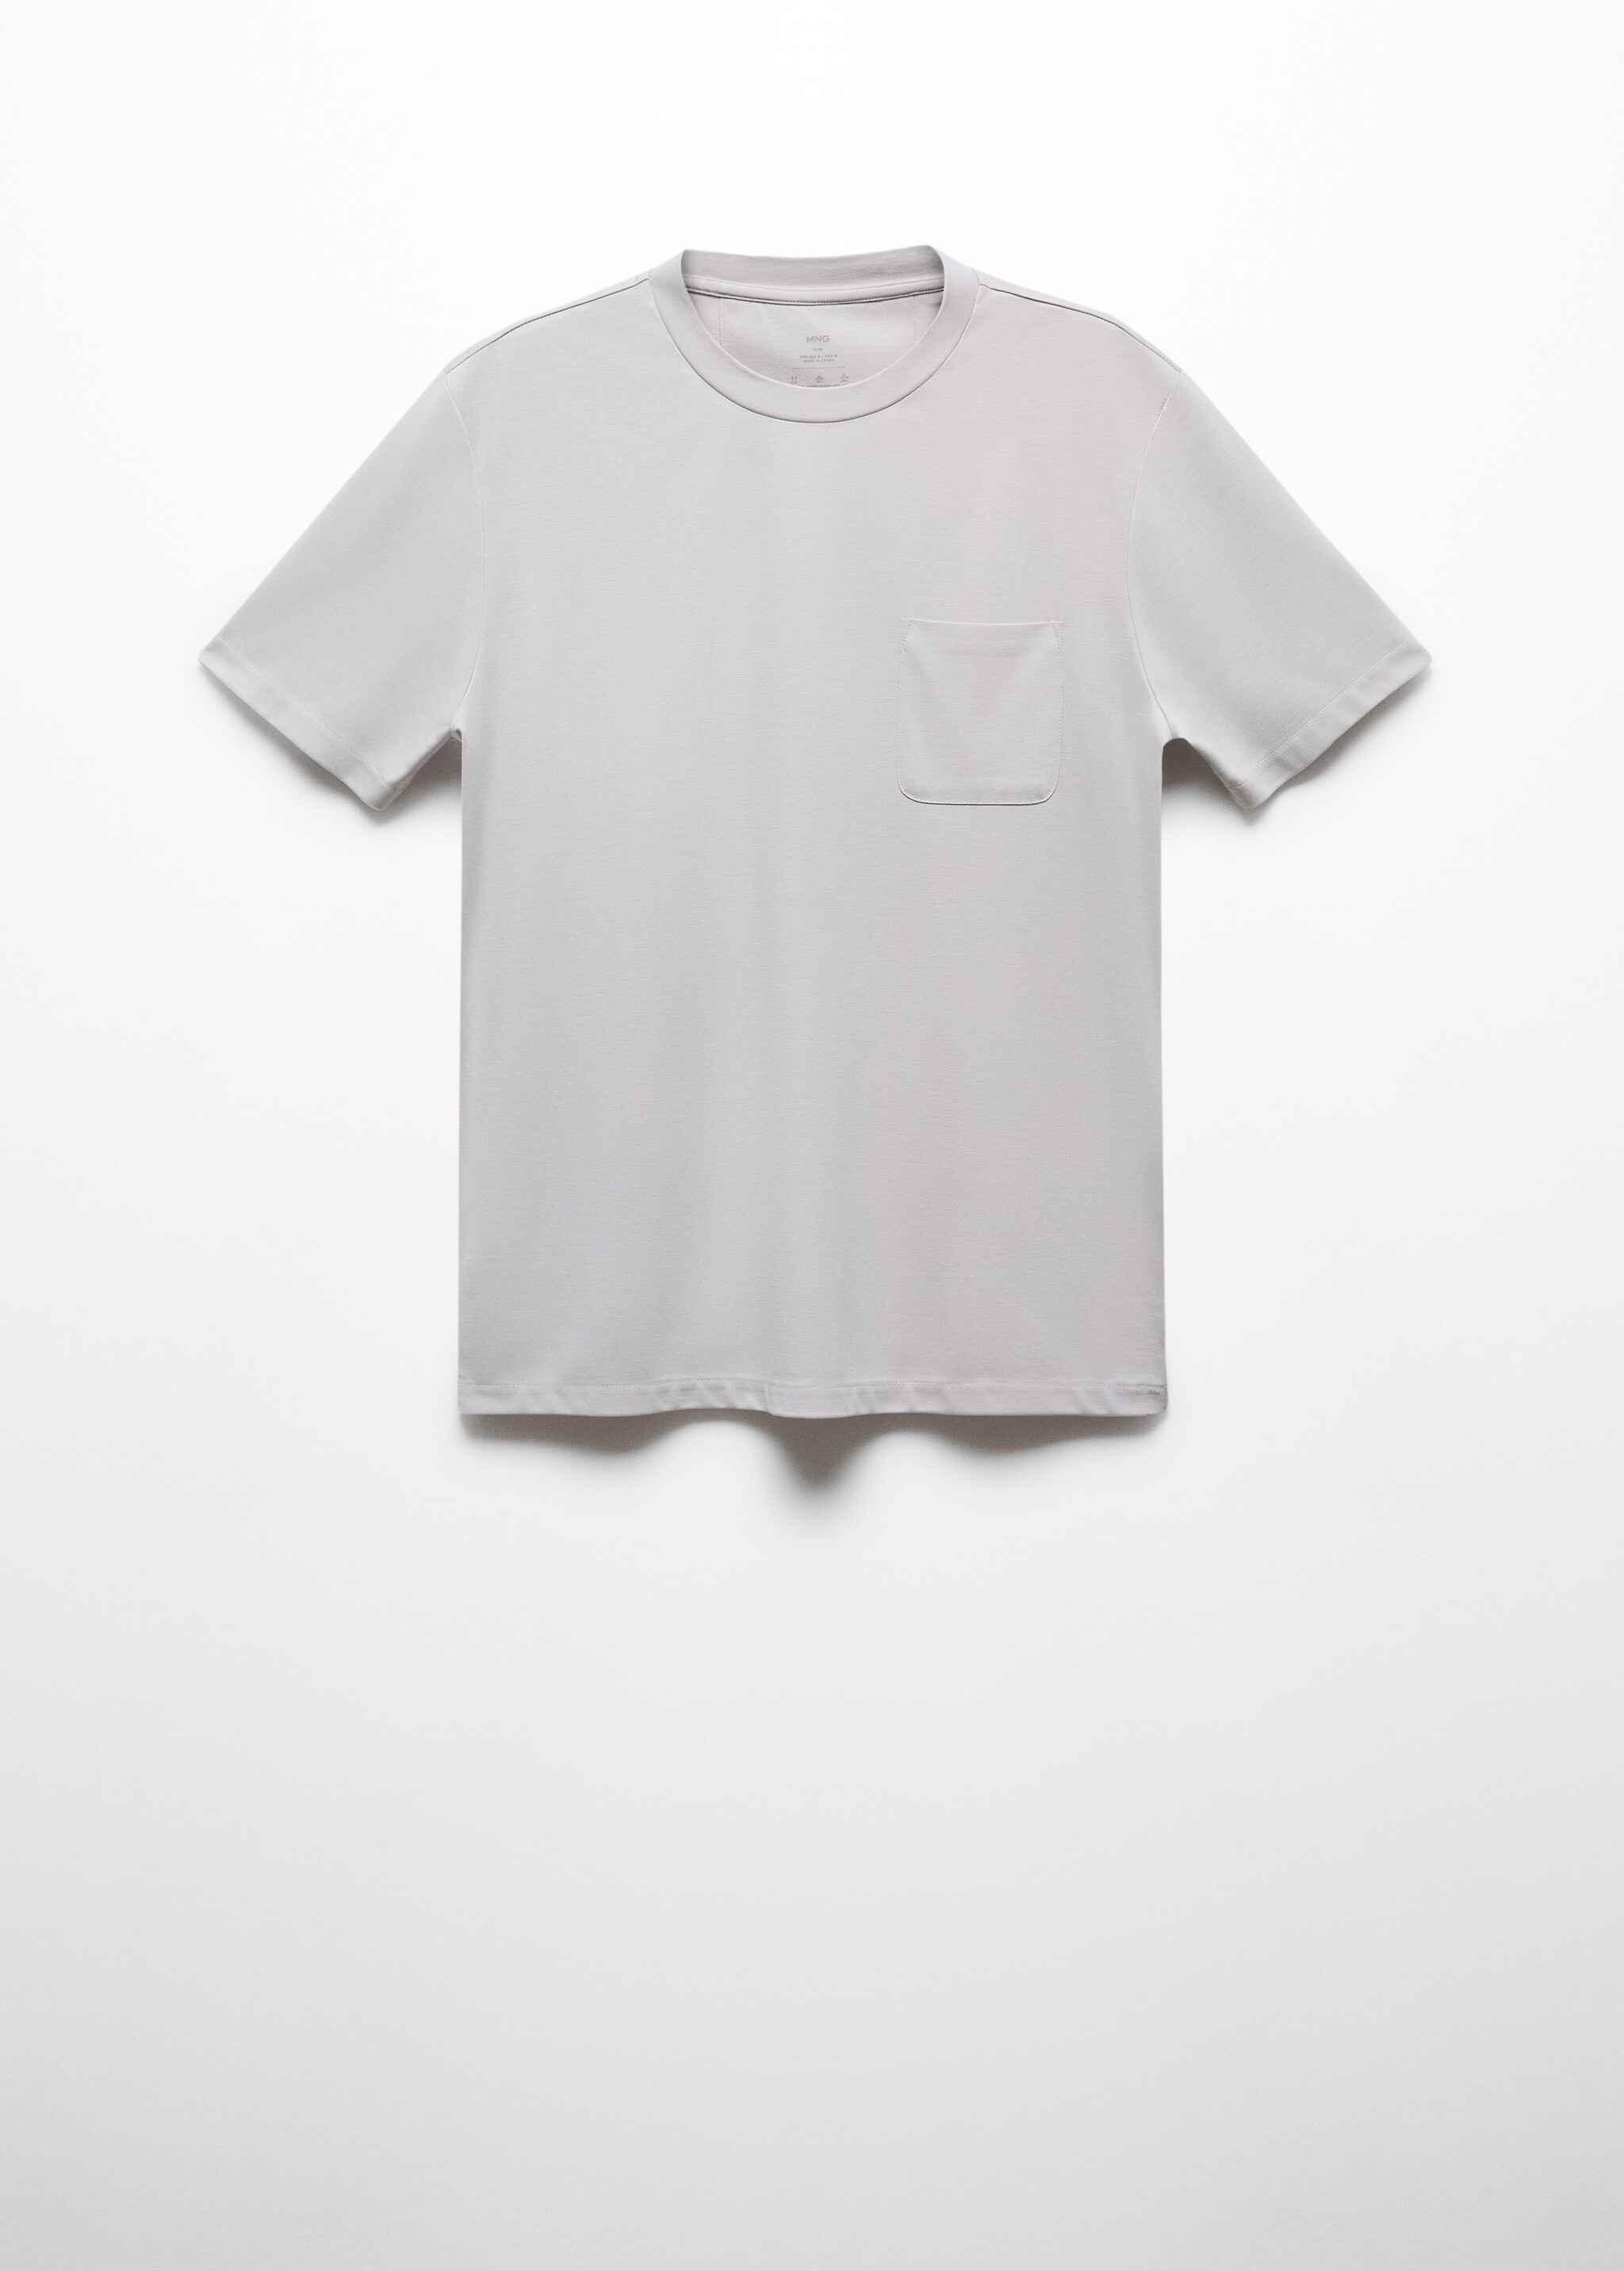 Camiseta slim fit bolsillo - Artículo sin modelo